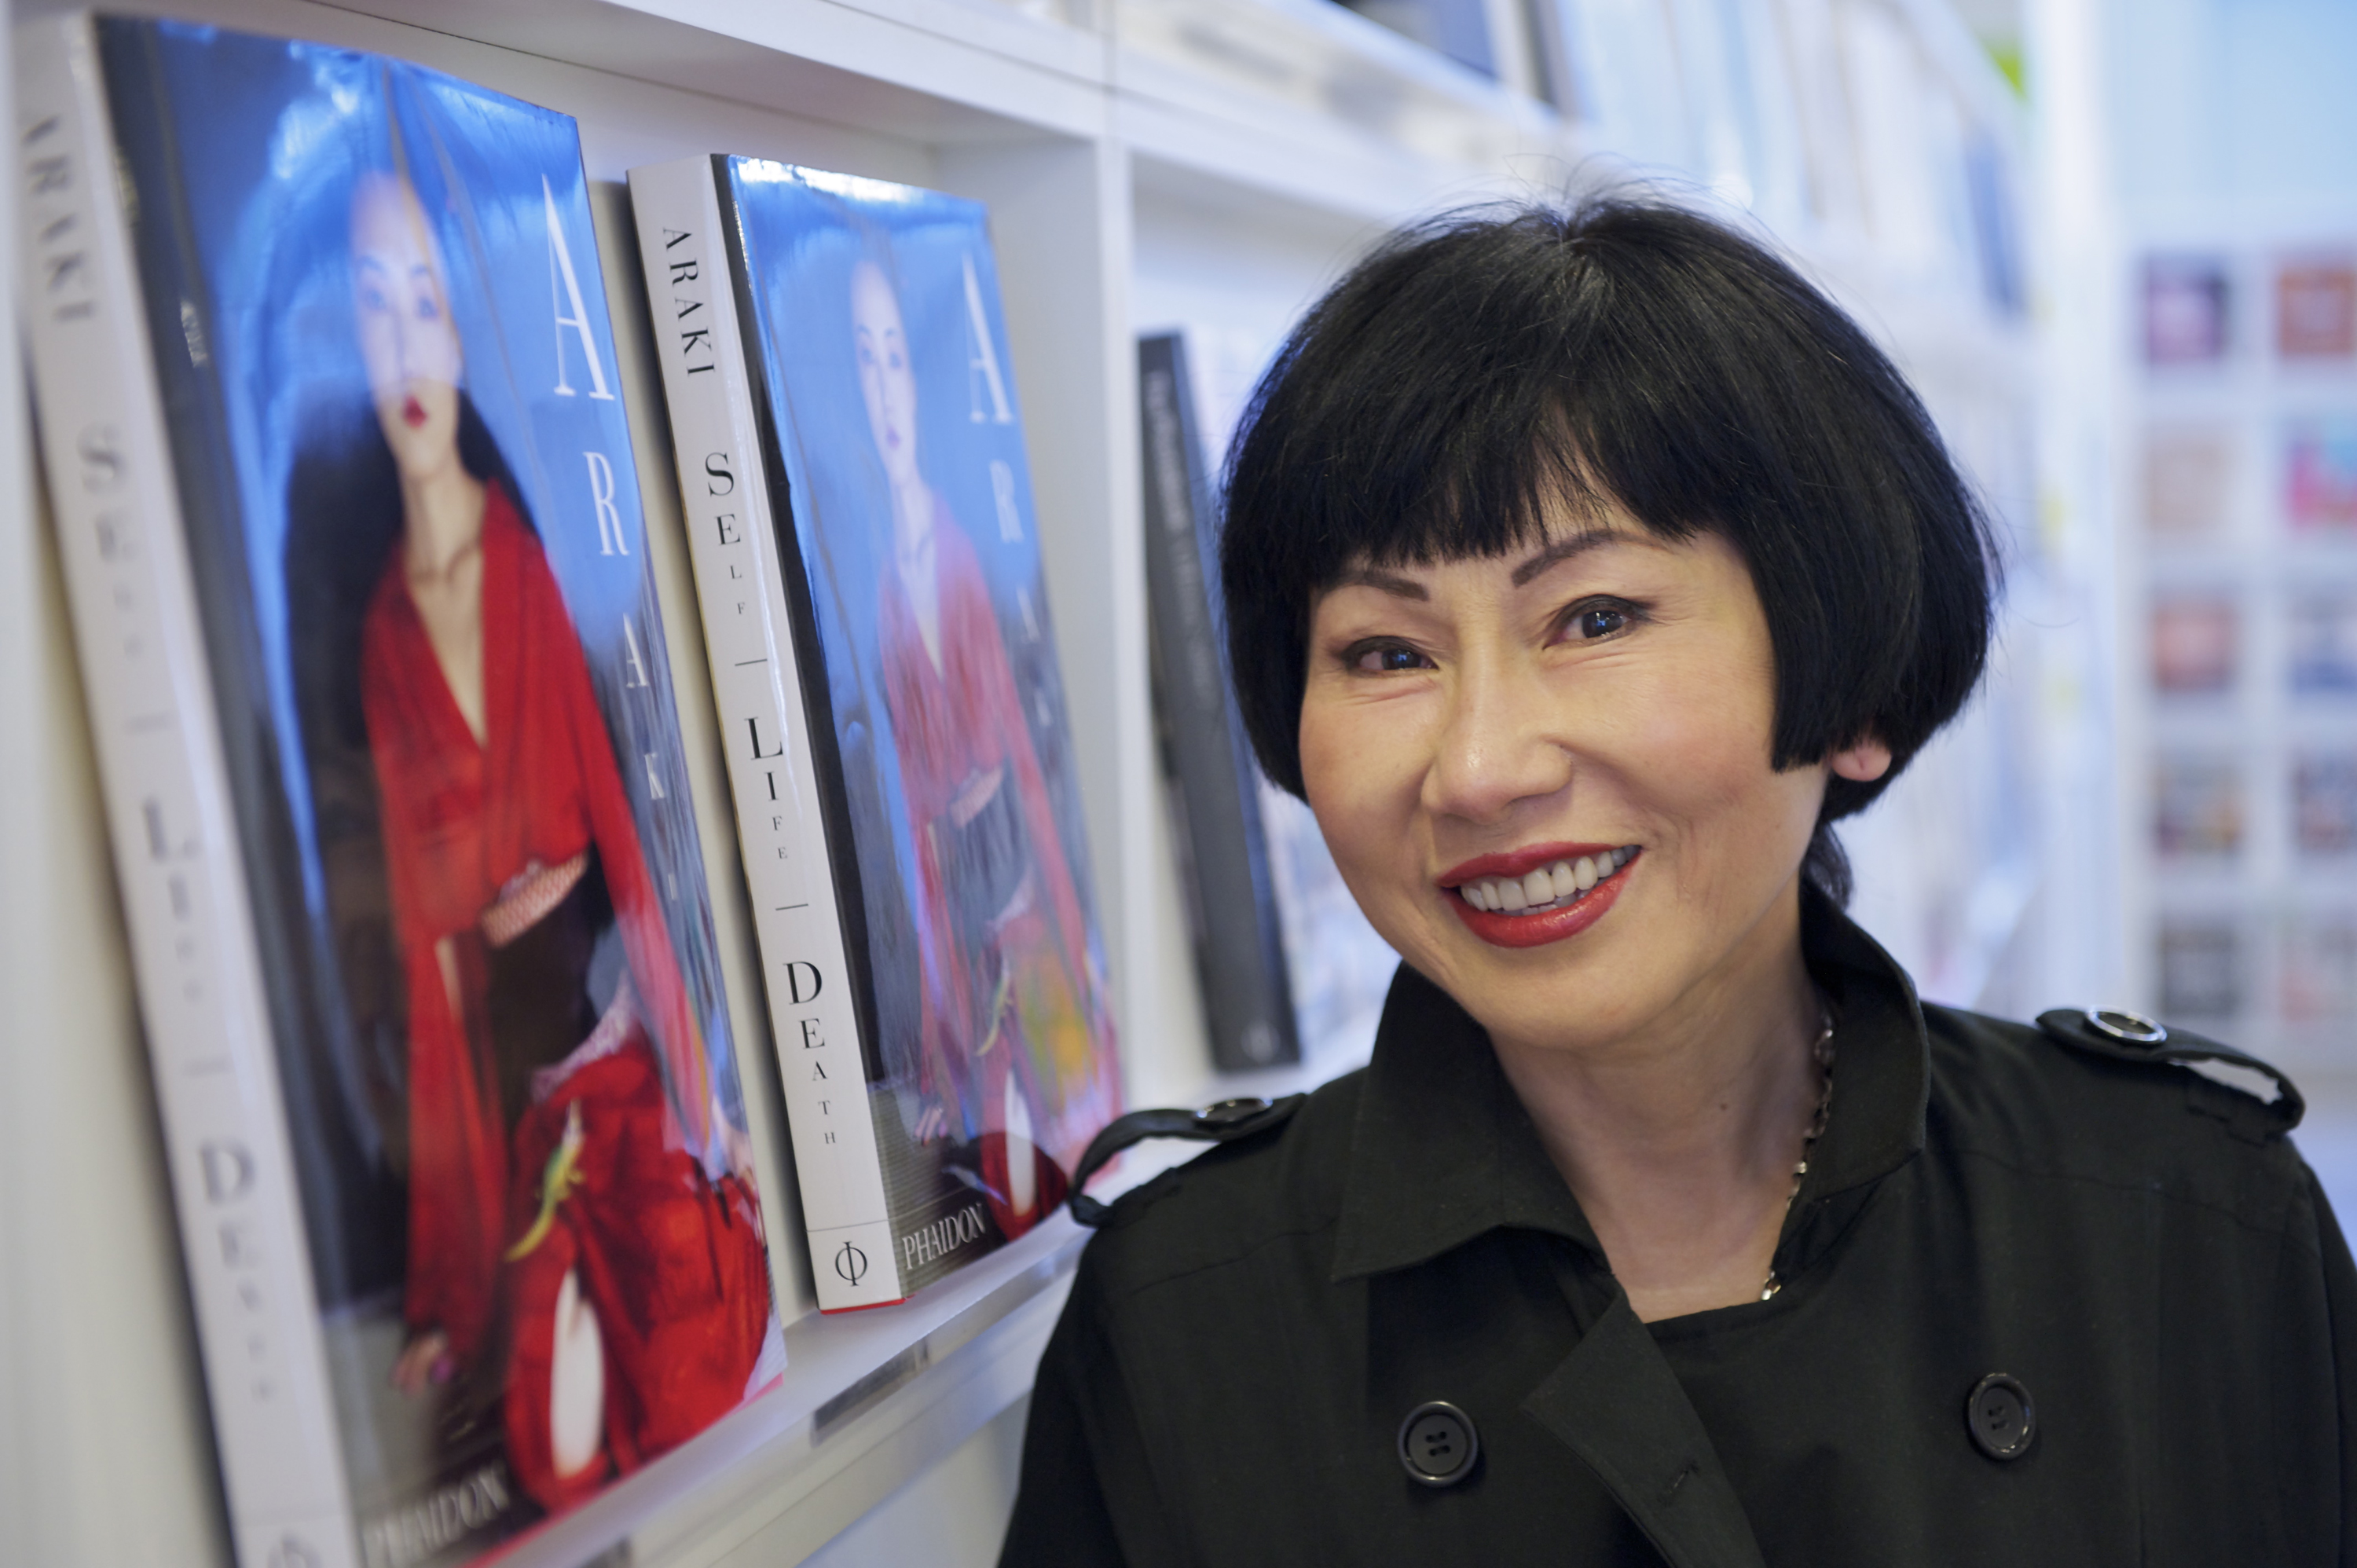 Author Amy Tan